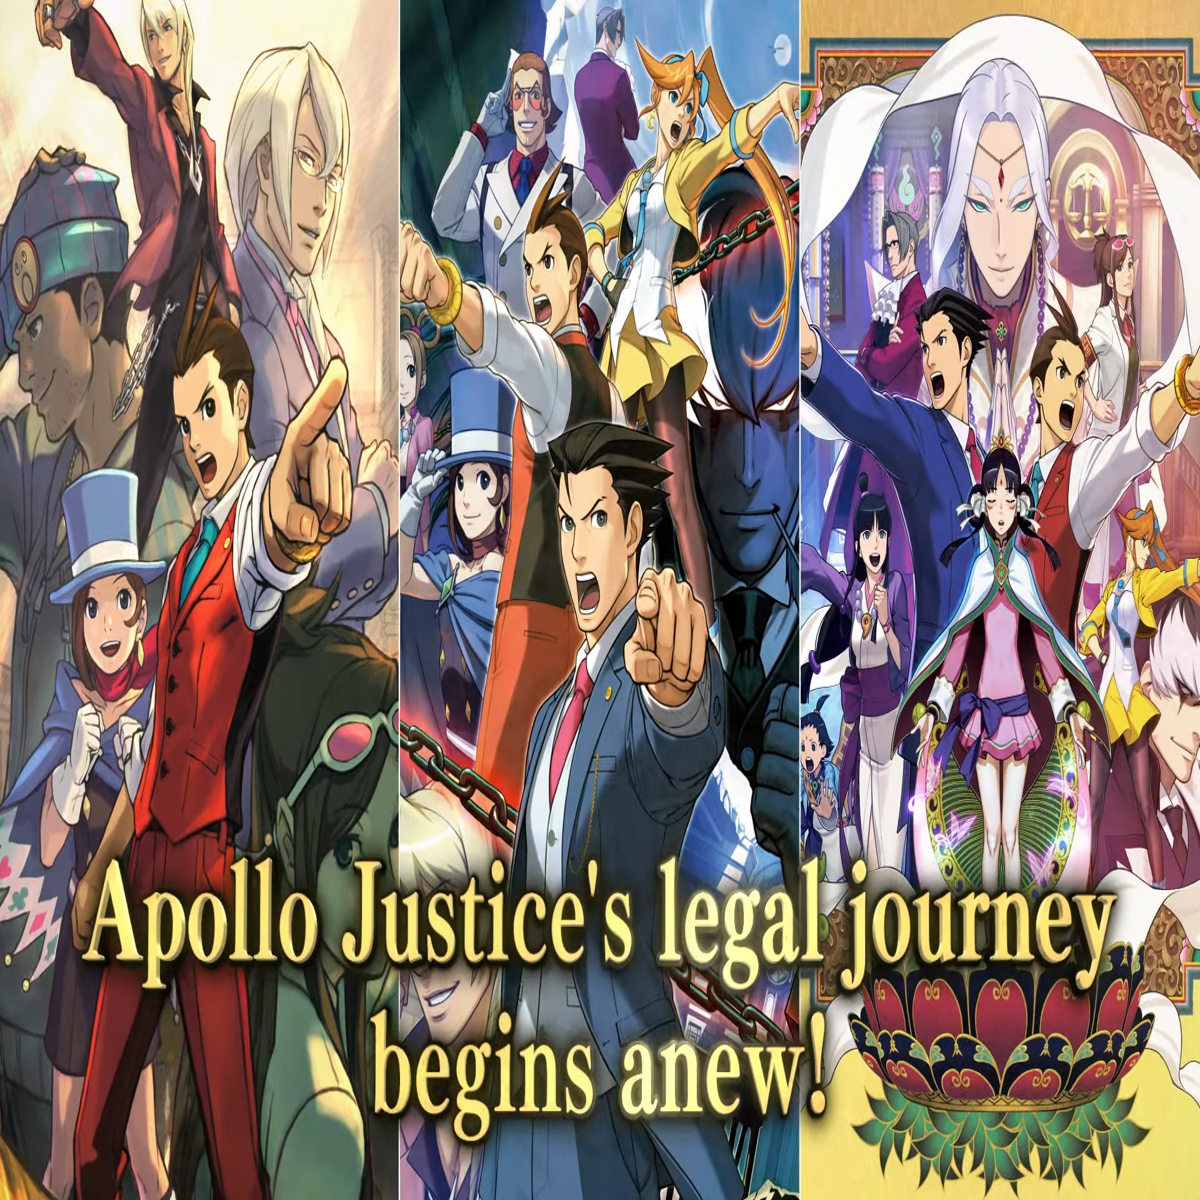 Phoenix Wright: Ace Attorney Trilogy - Launch Trailer